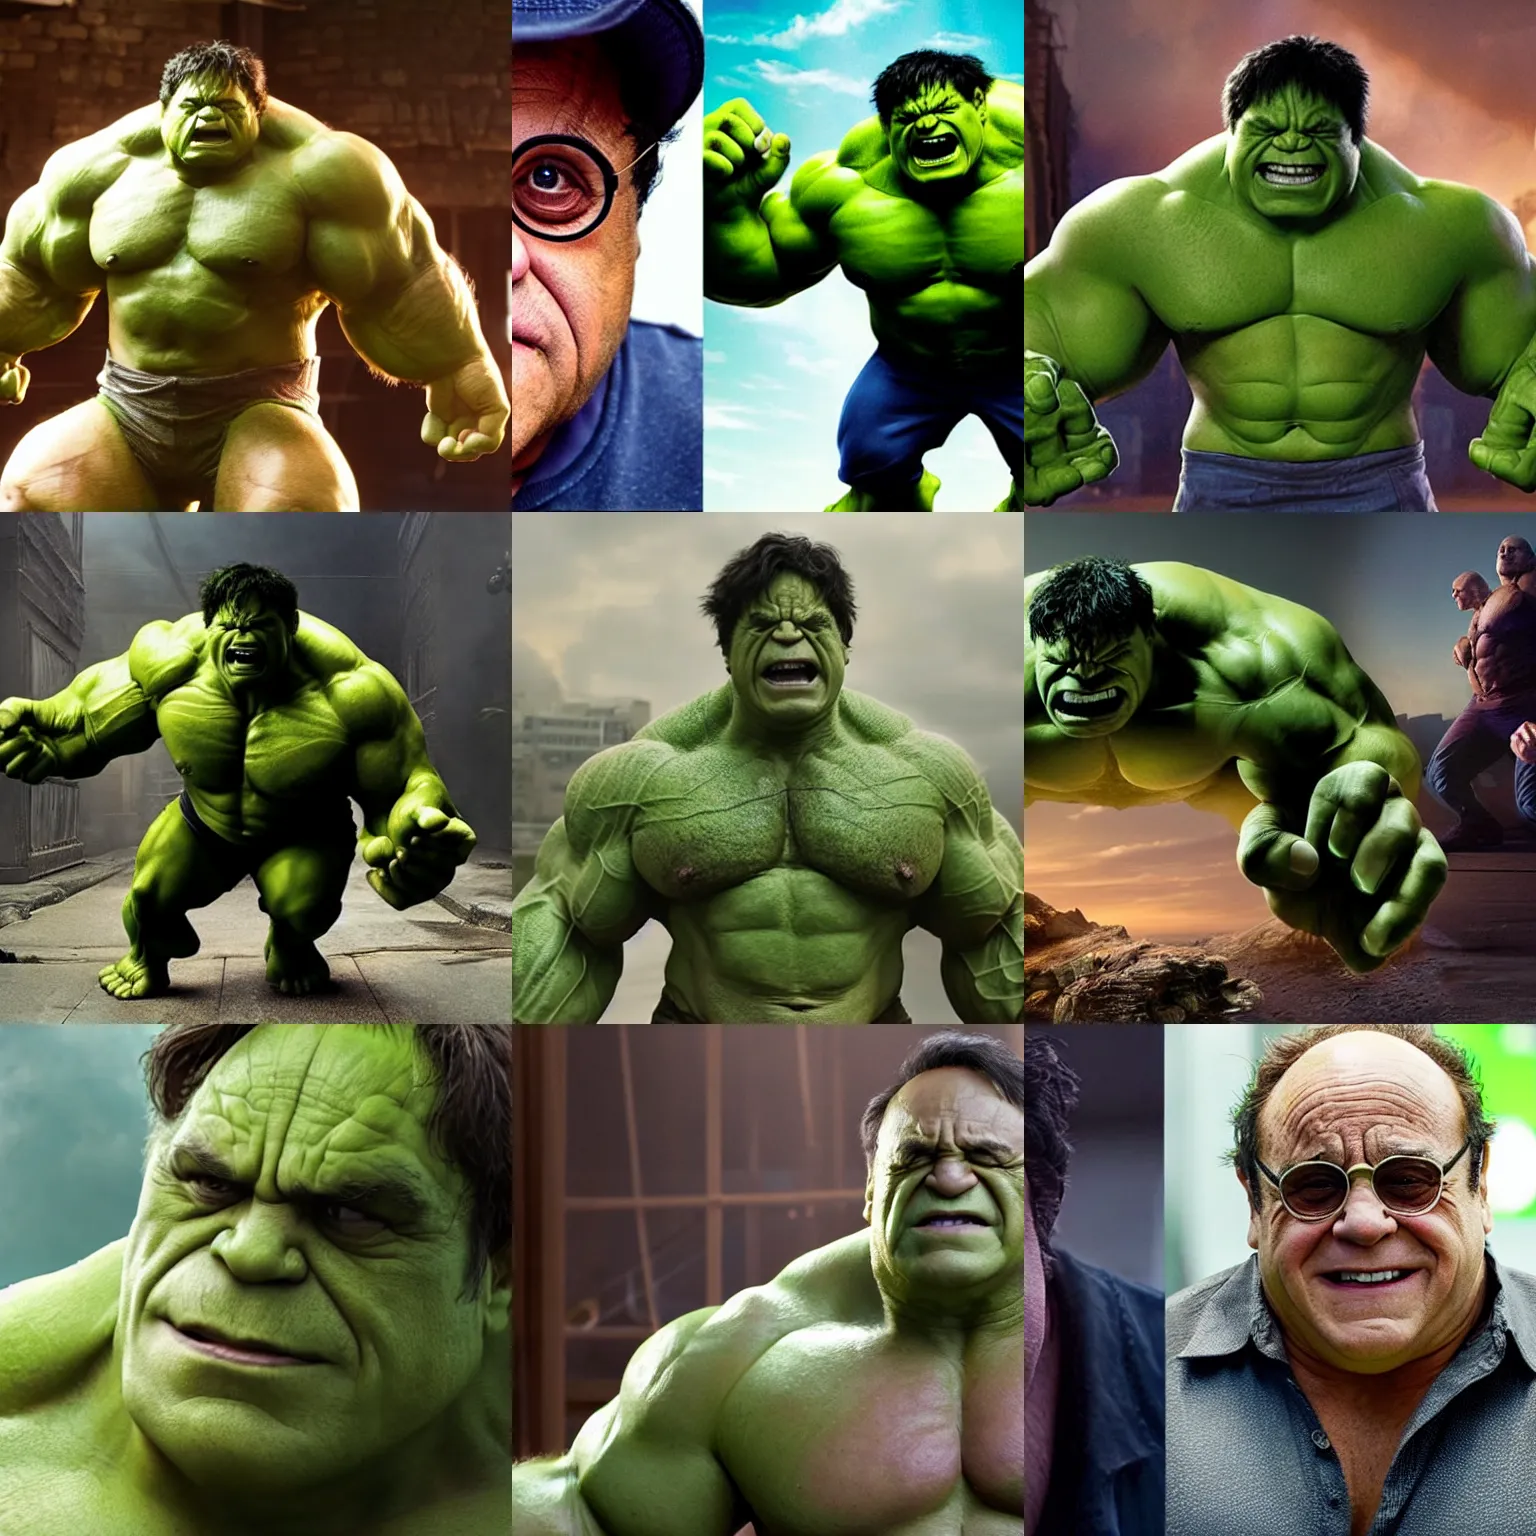 Prompt: danny devito as hulk, marvel cinematic universe, mcu, 4 k, raw, unedited, green skin, symmetrical balance, in - frame